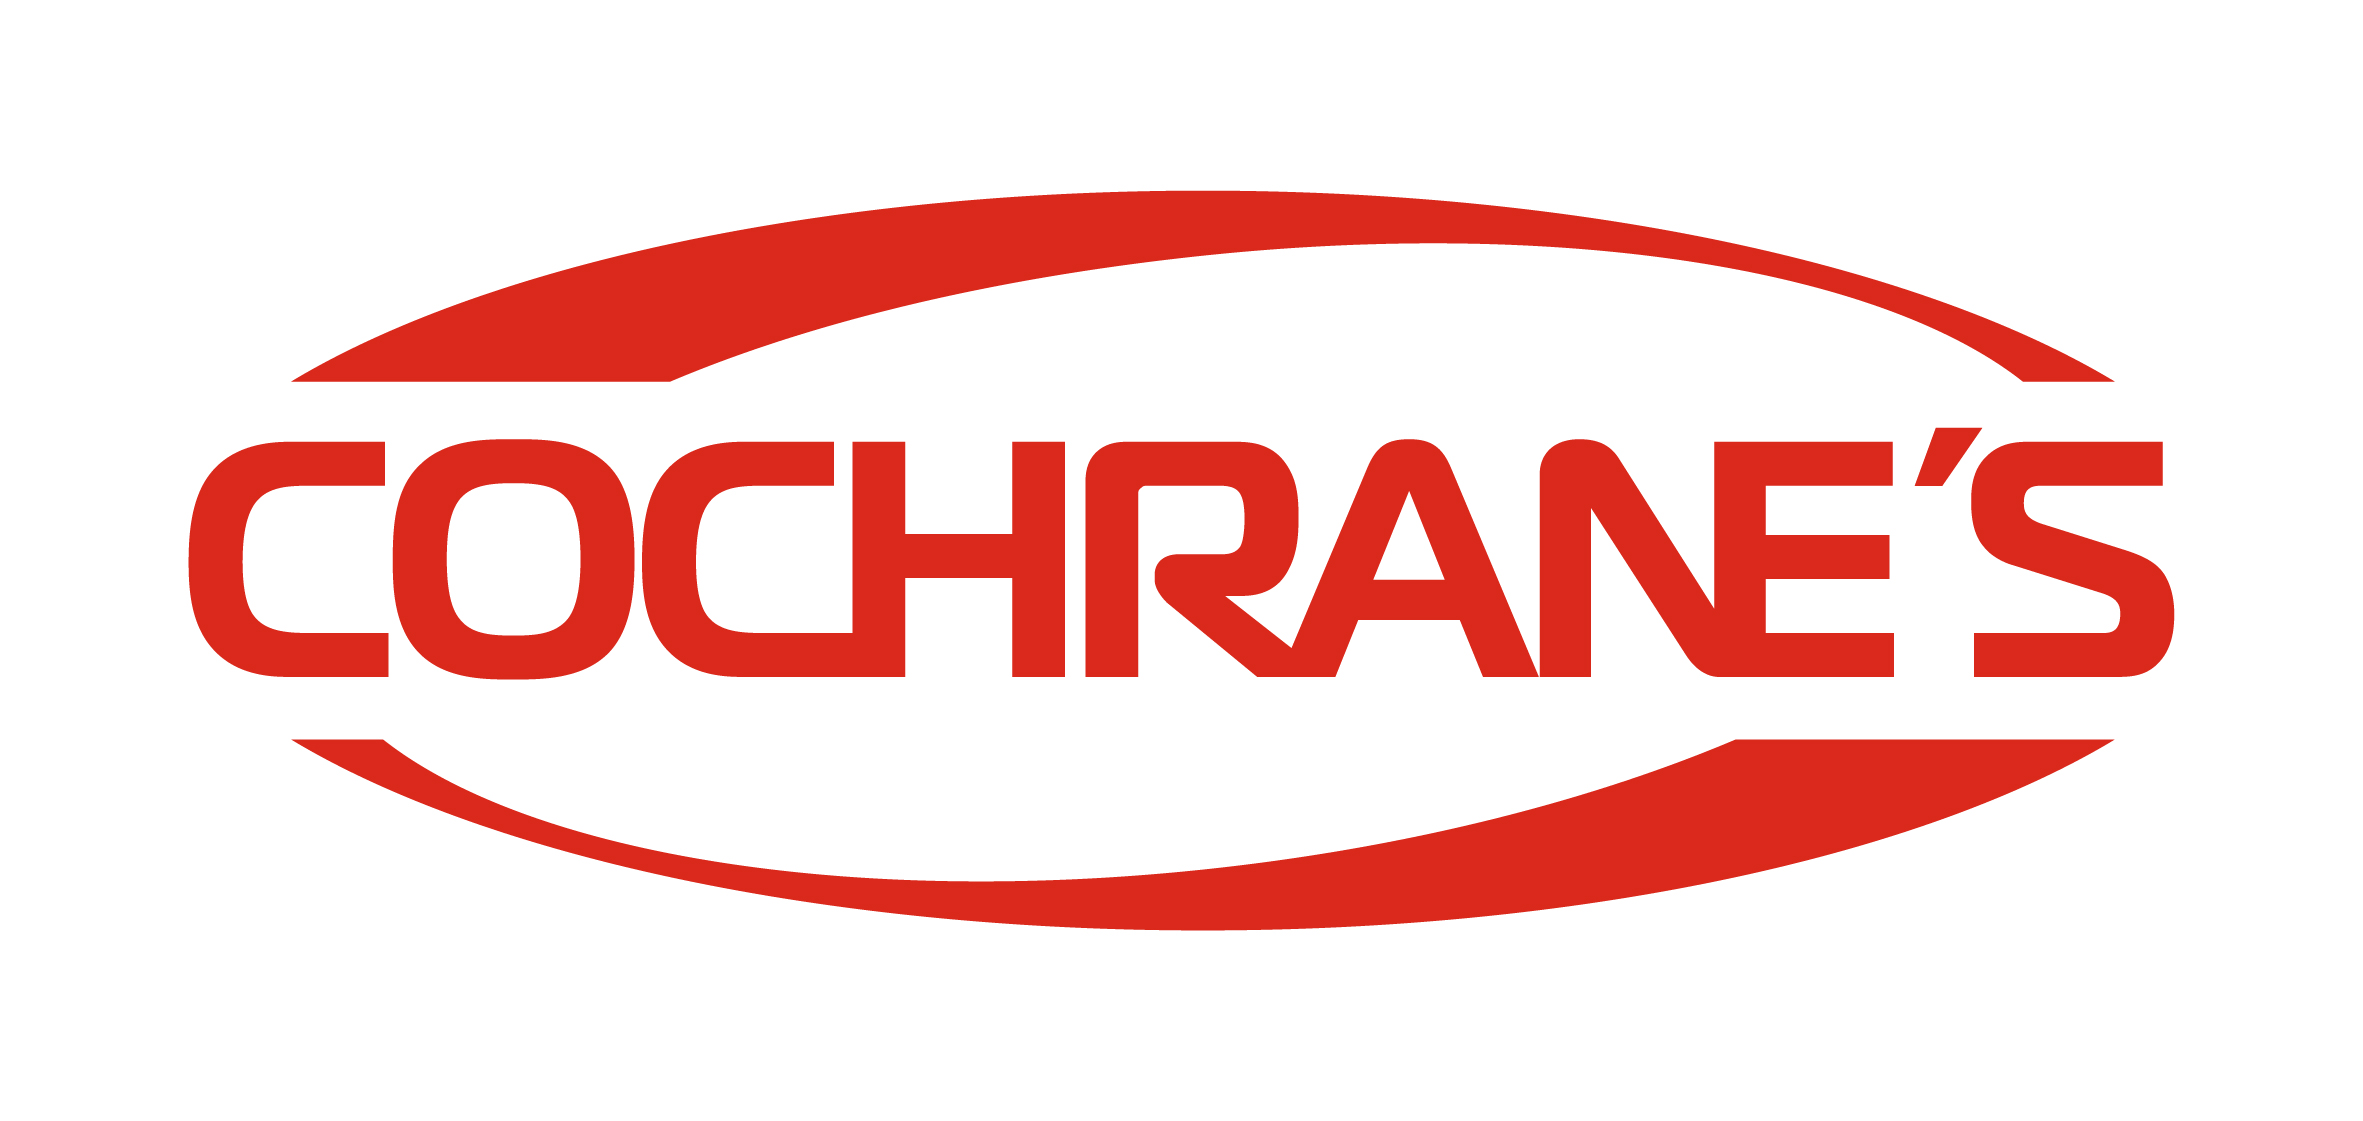 Cochranes logo